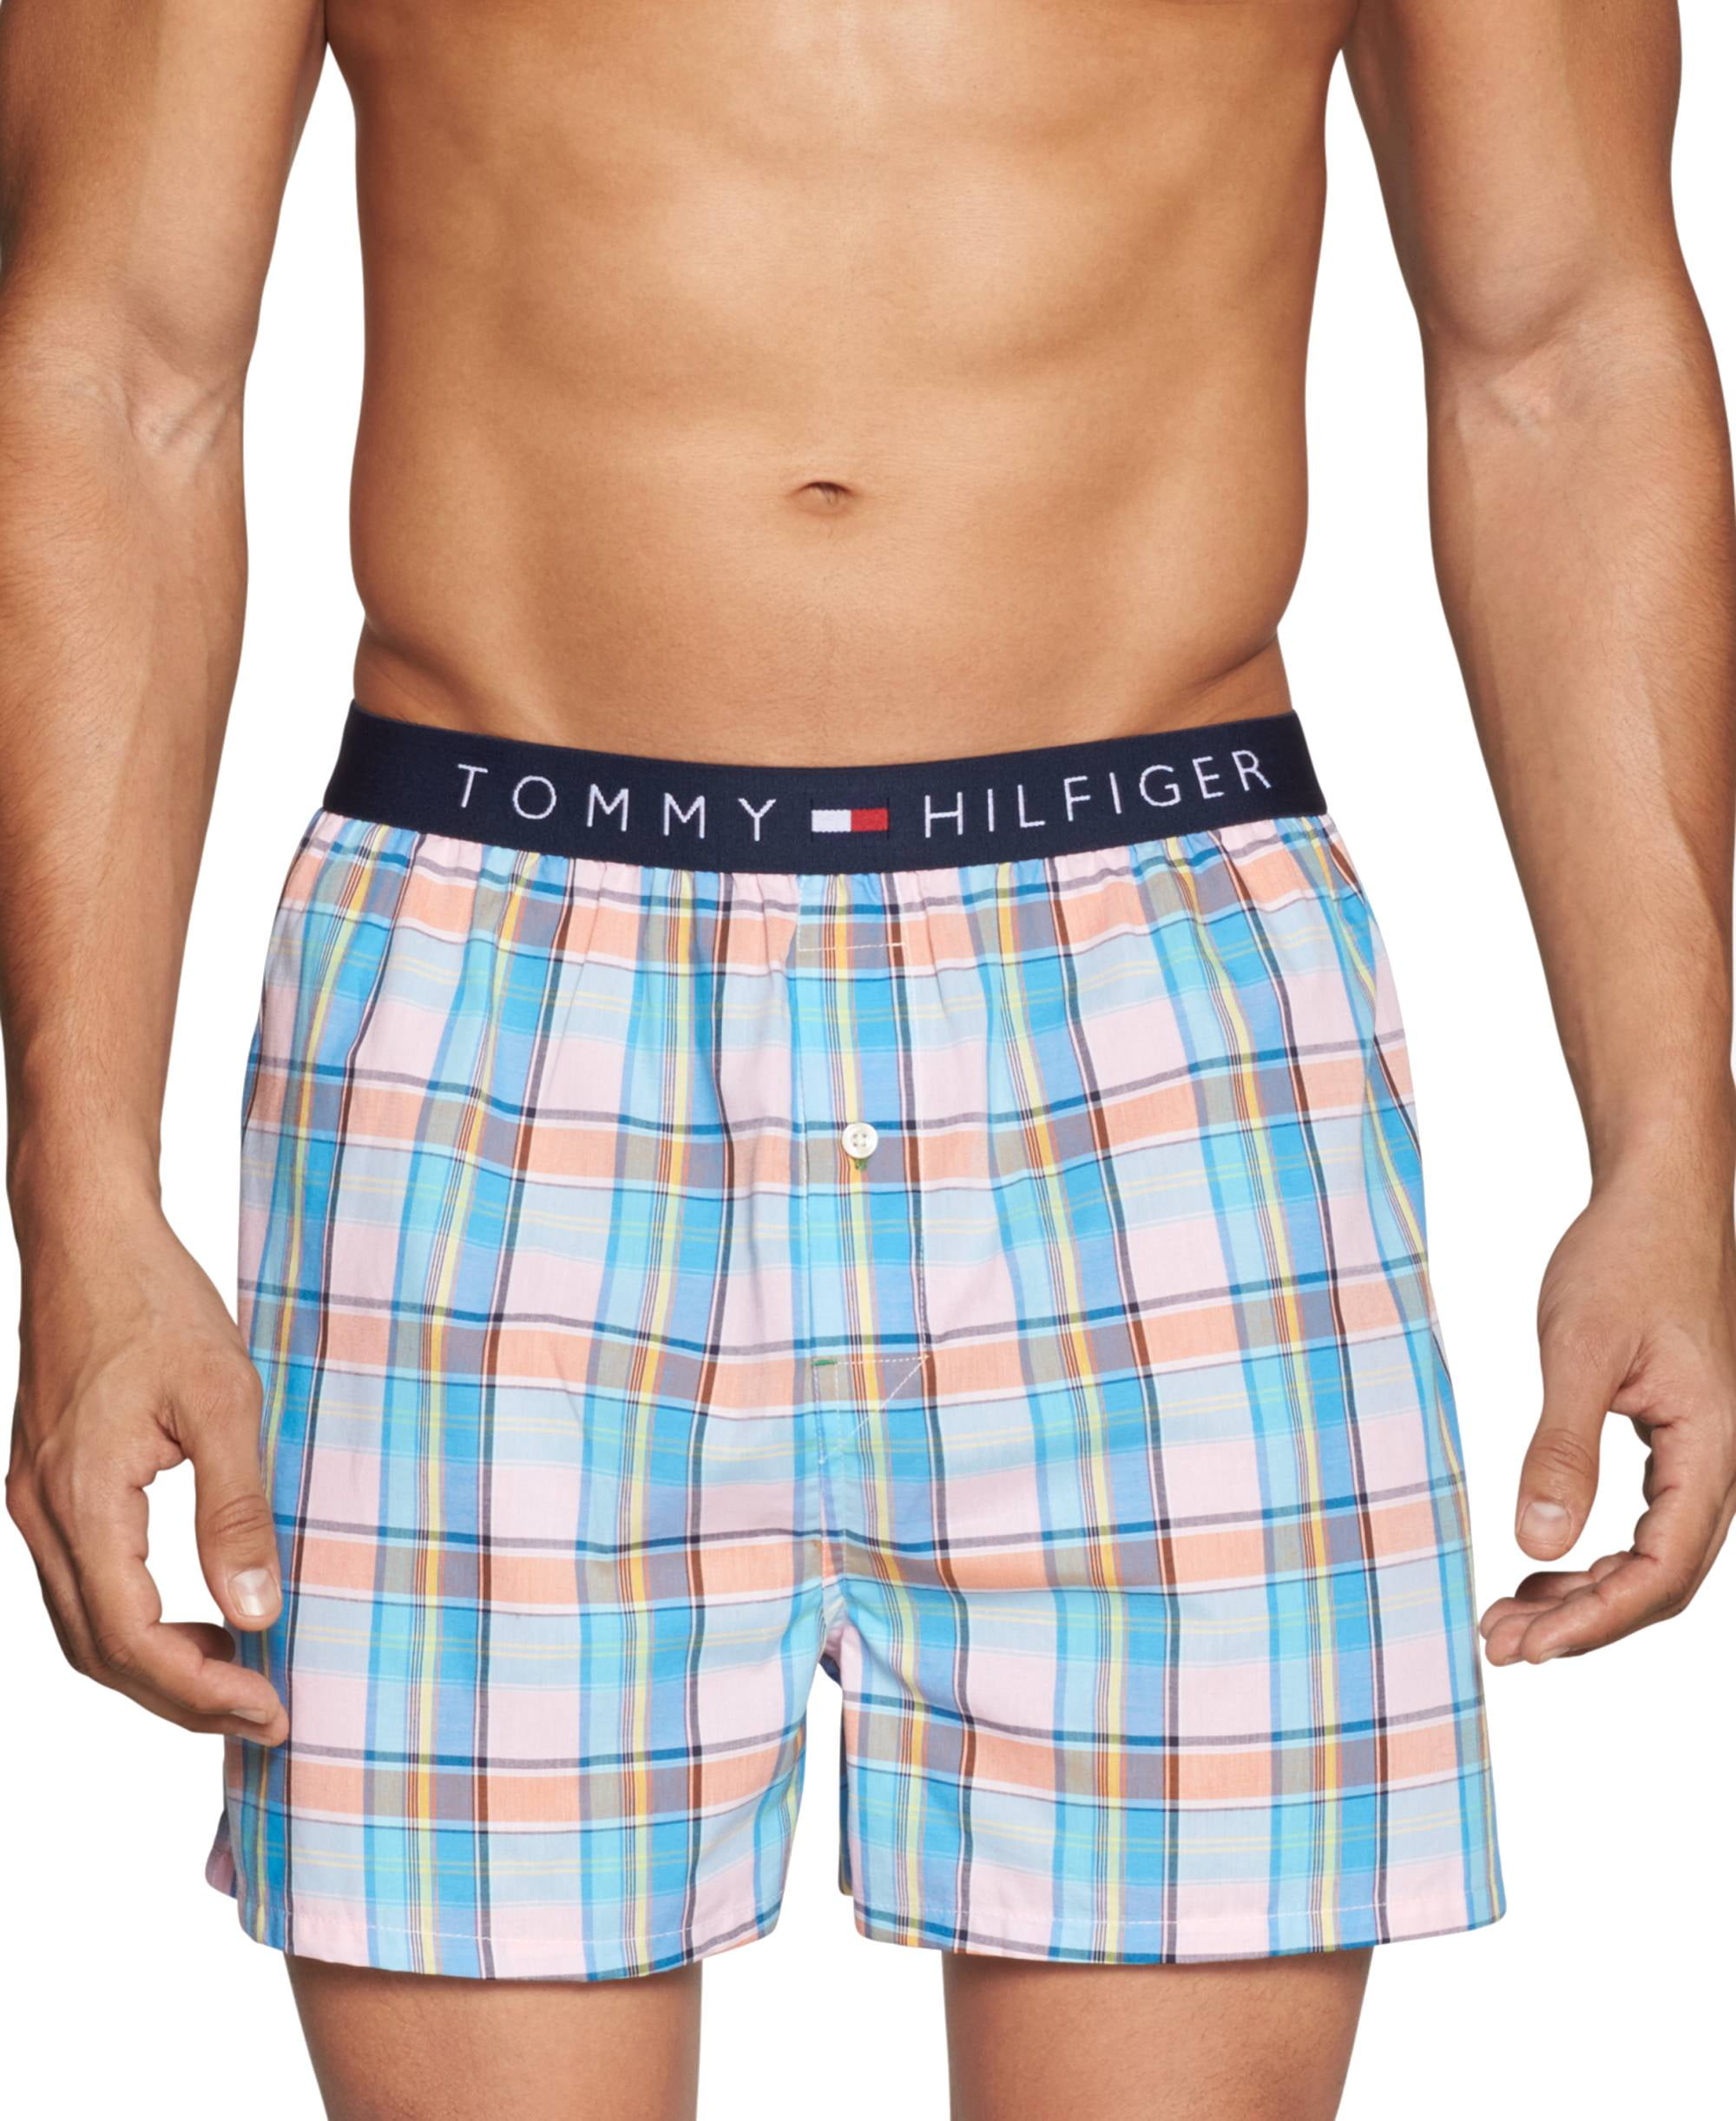 tommy hilfiger men's printed cotton boxers